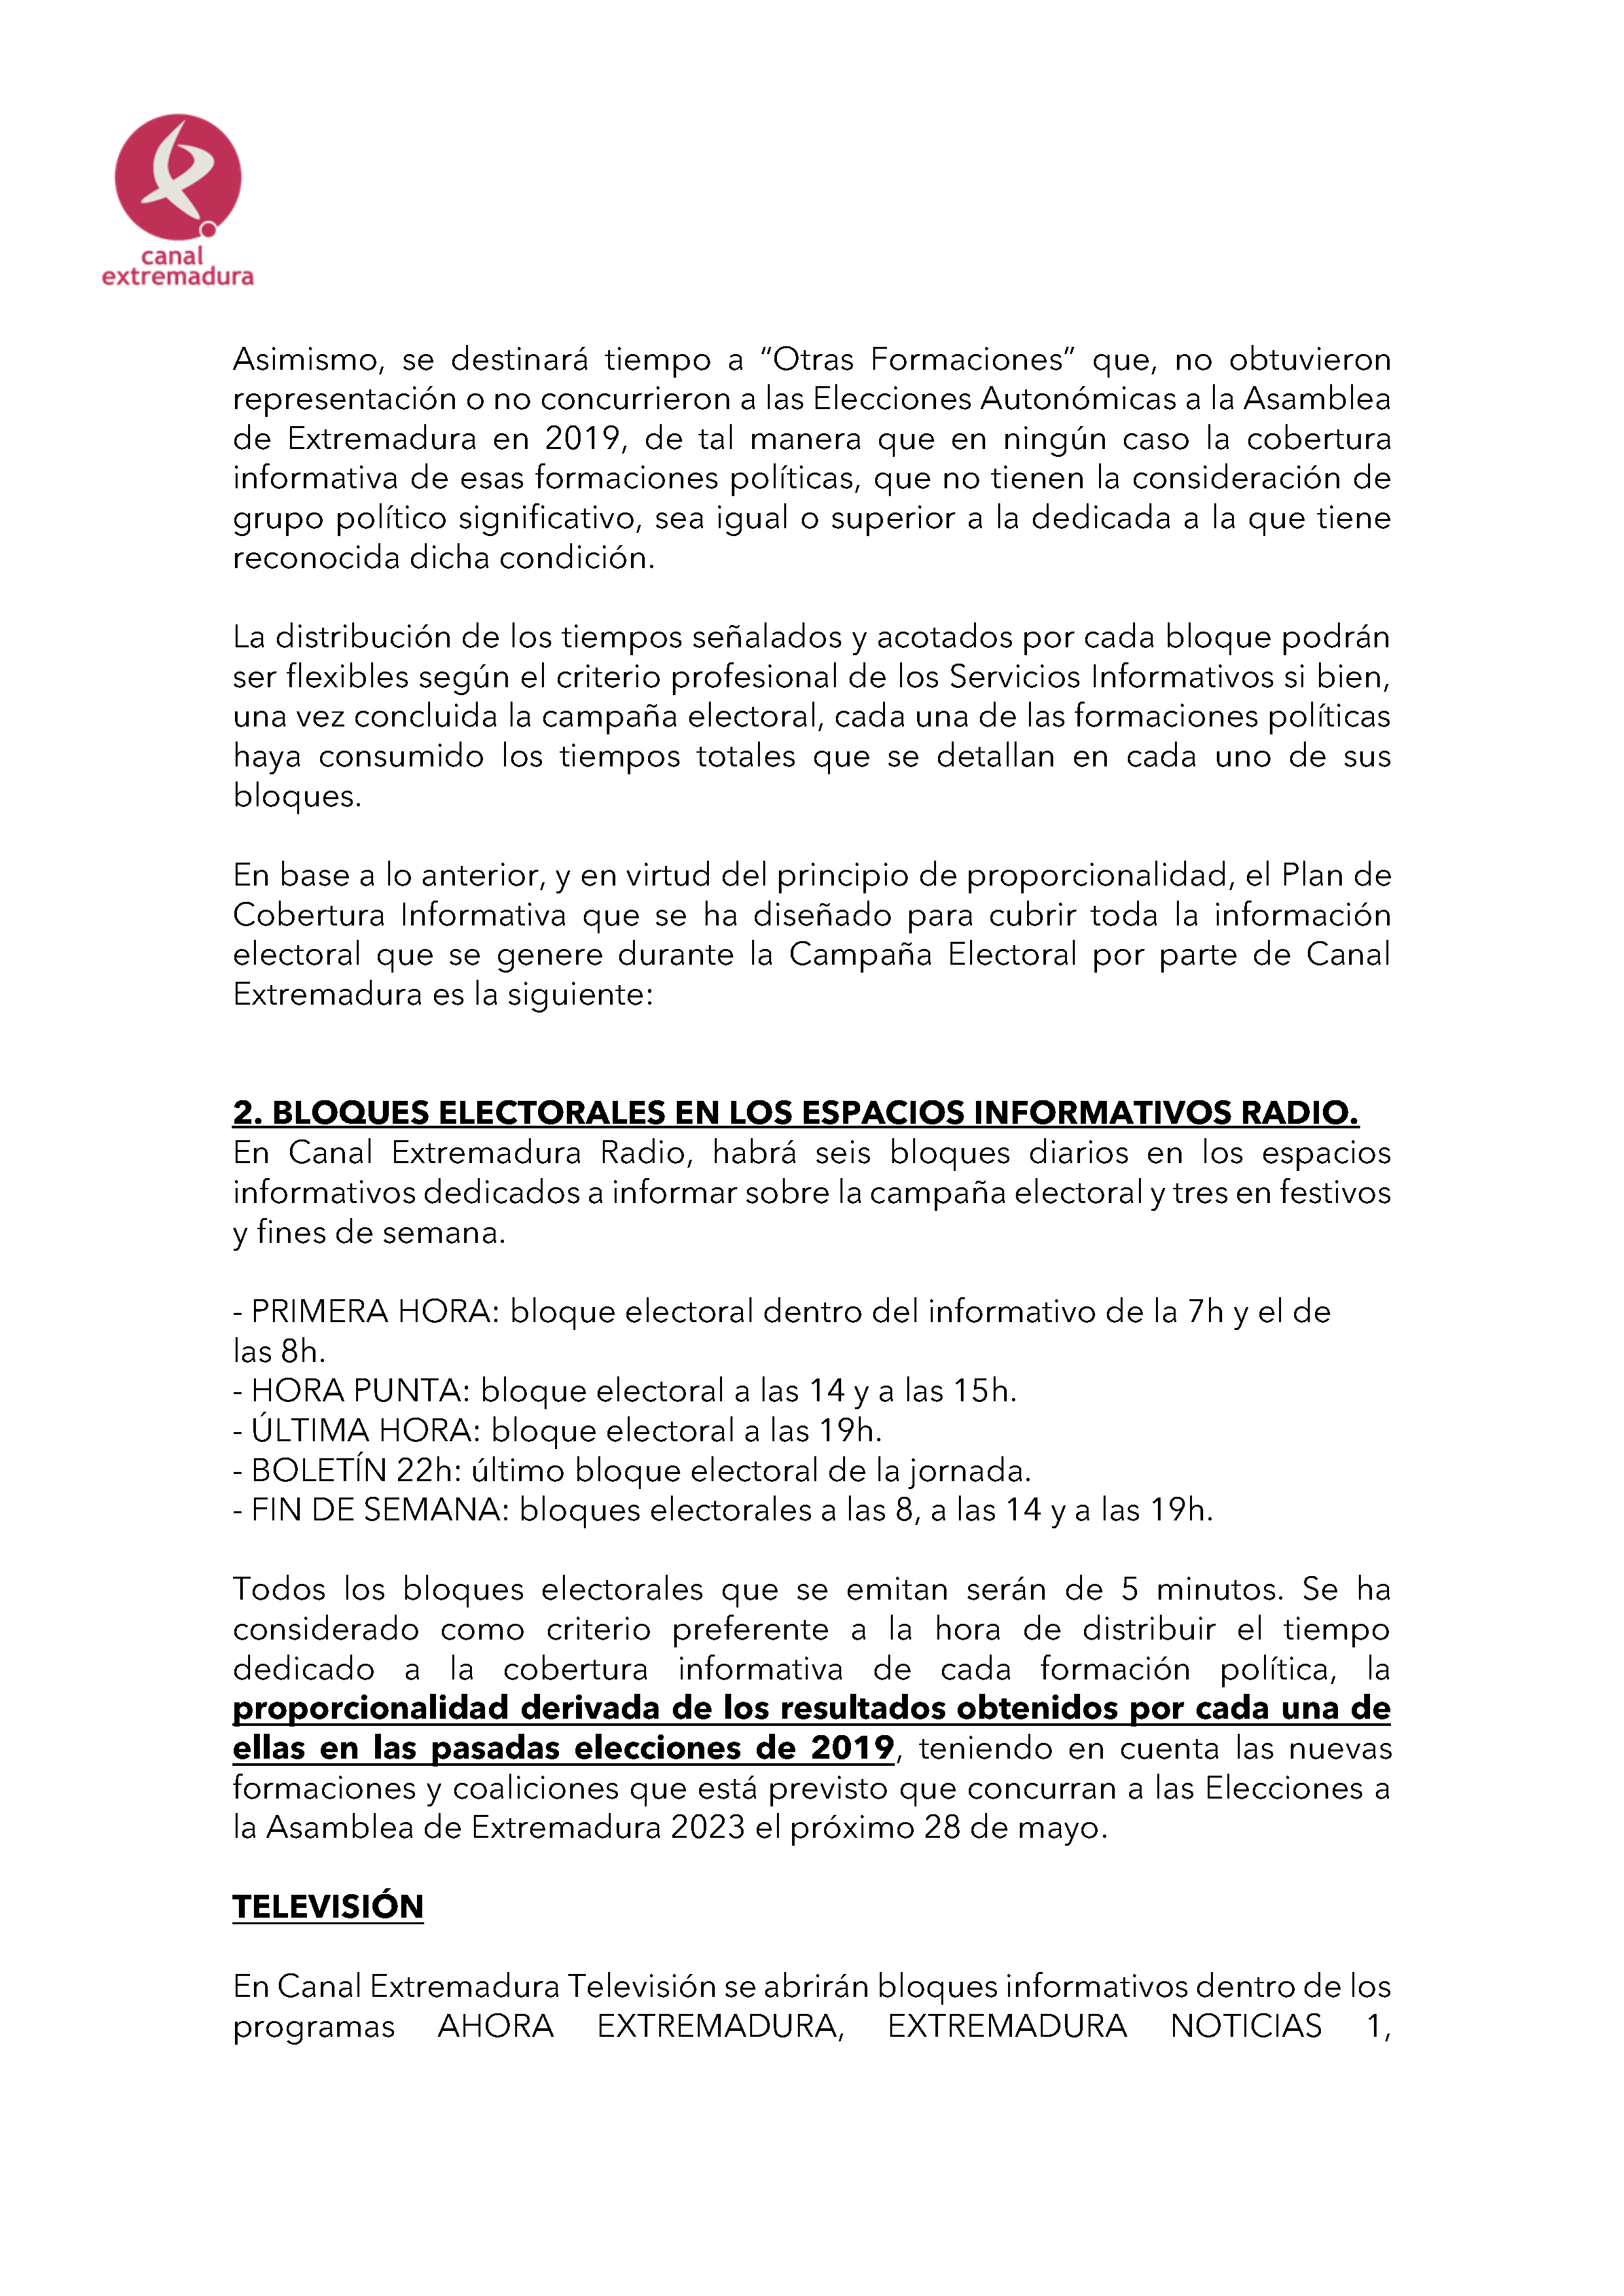 PLAN DE COBERTURA INFORMATIVA DE CANAL EXTREMADURA Pag 5